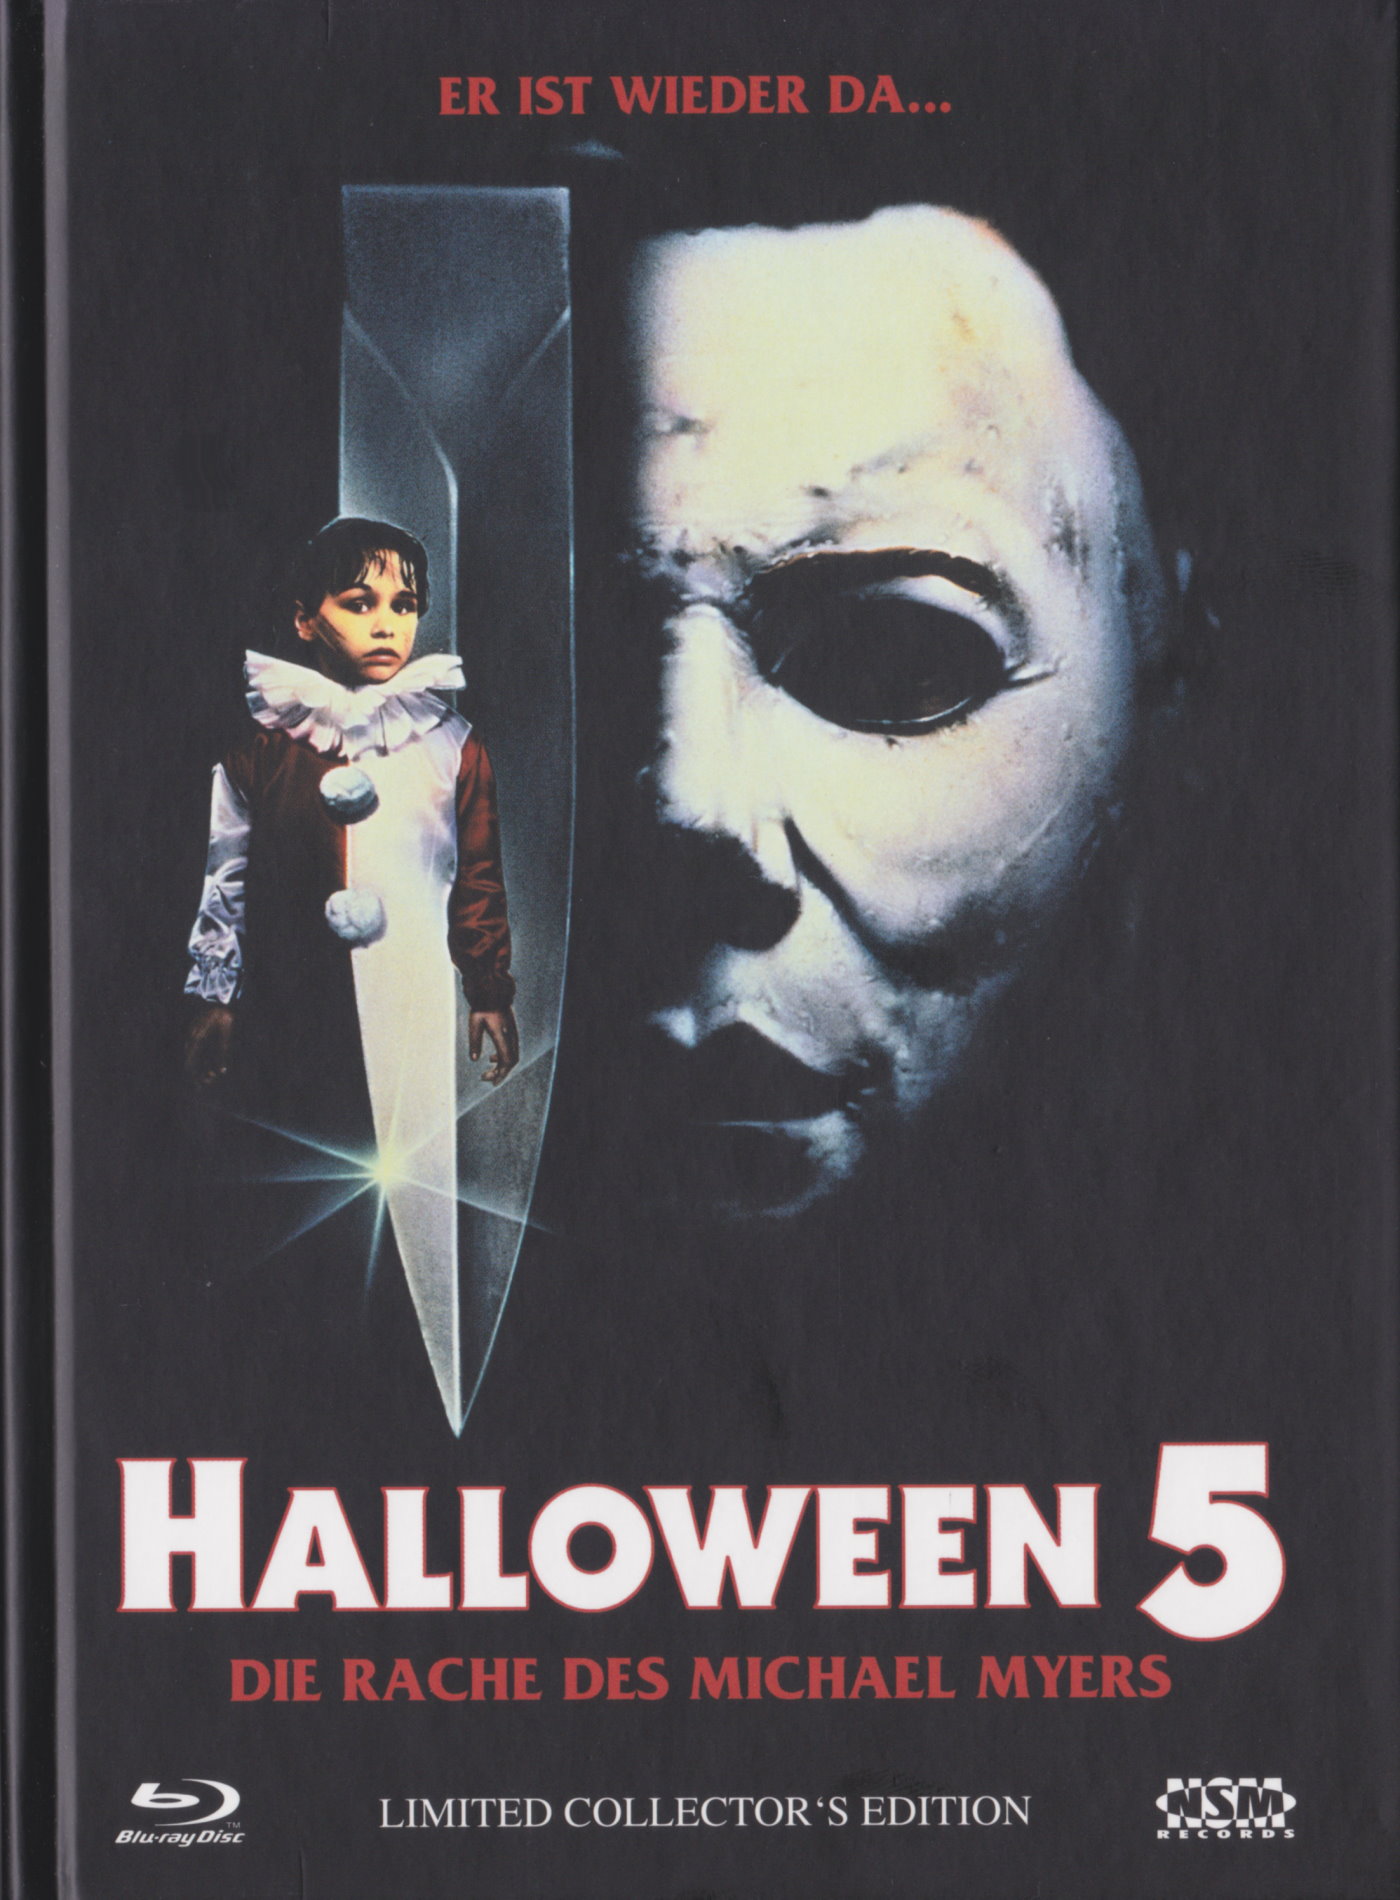 Cover - Halloween 5 - Die Rache des Michael Myers.jpg